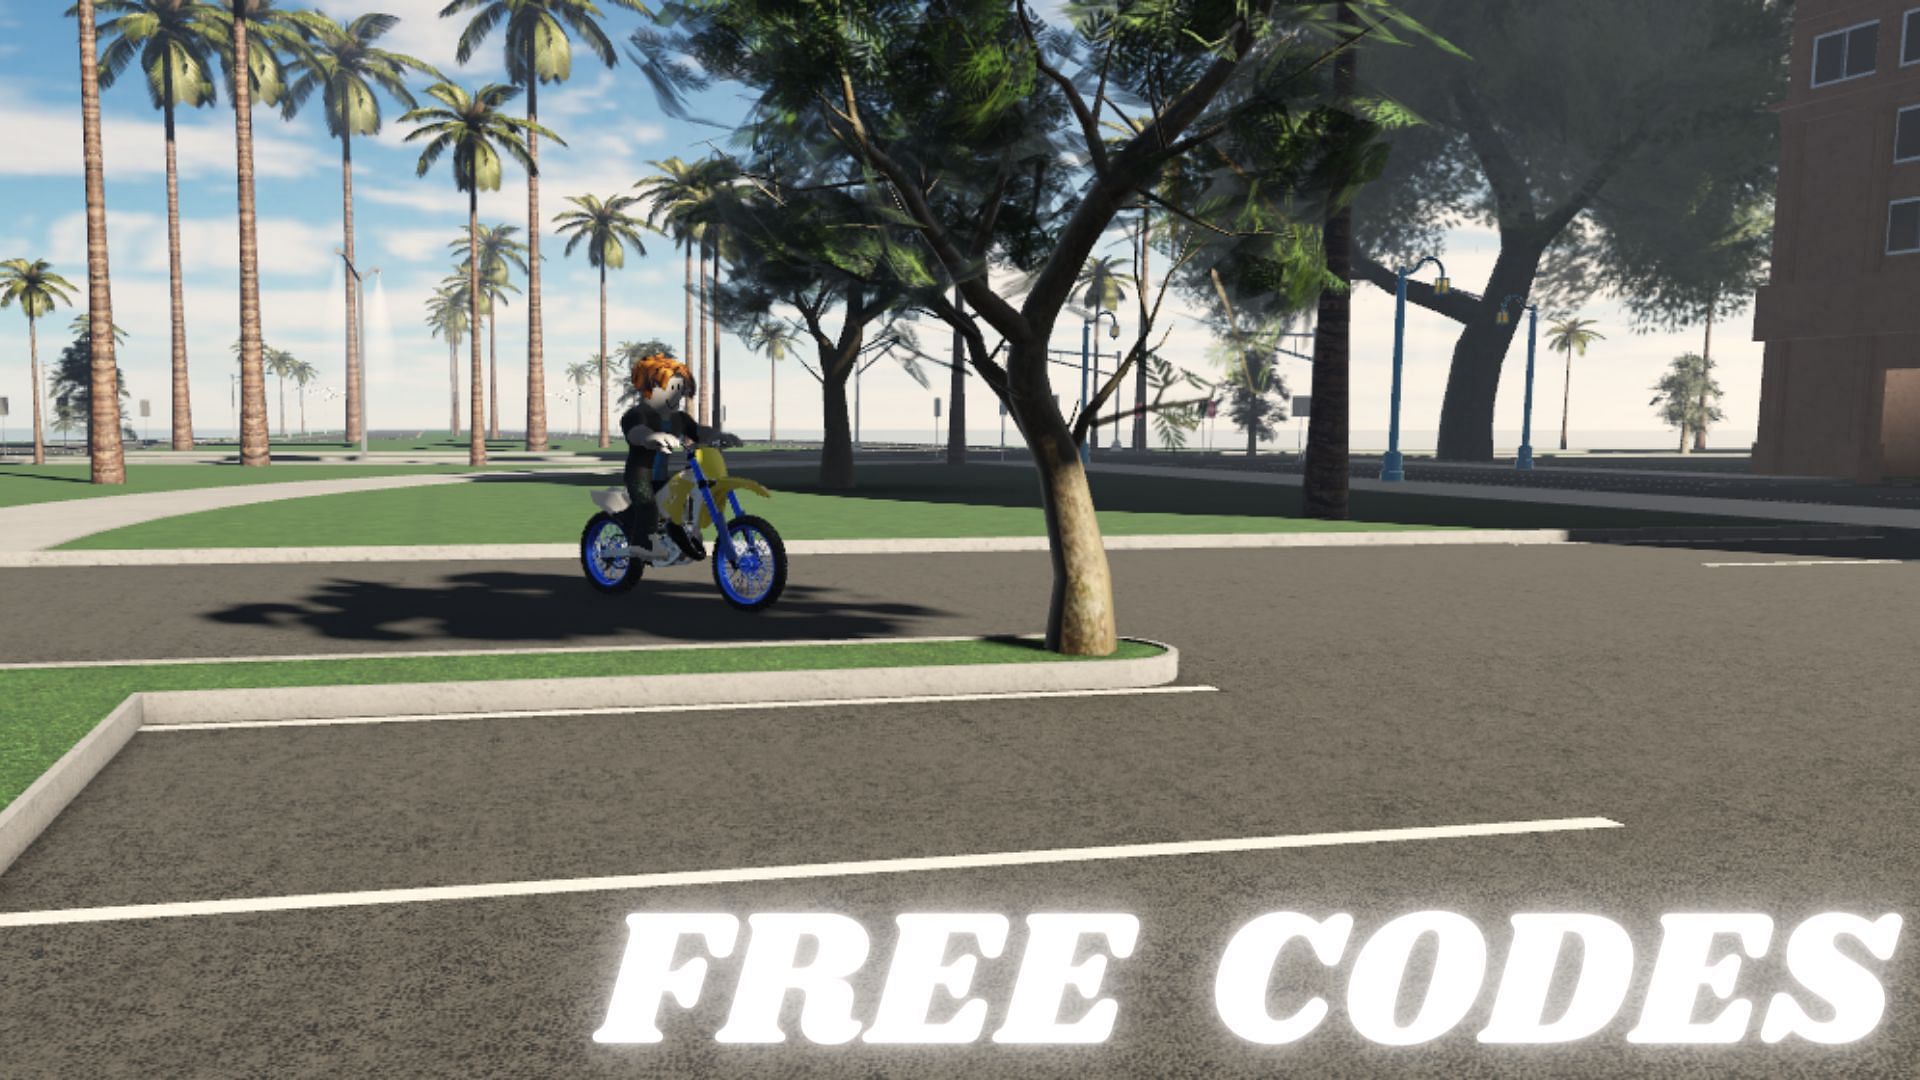 Bikelife Miami 2 free codes (Images via Roblox and Sportskeeda)